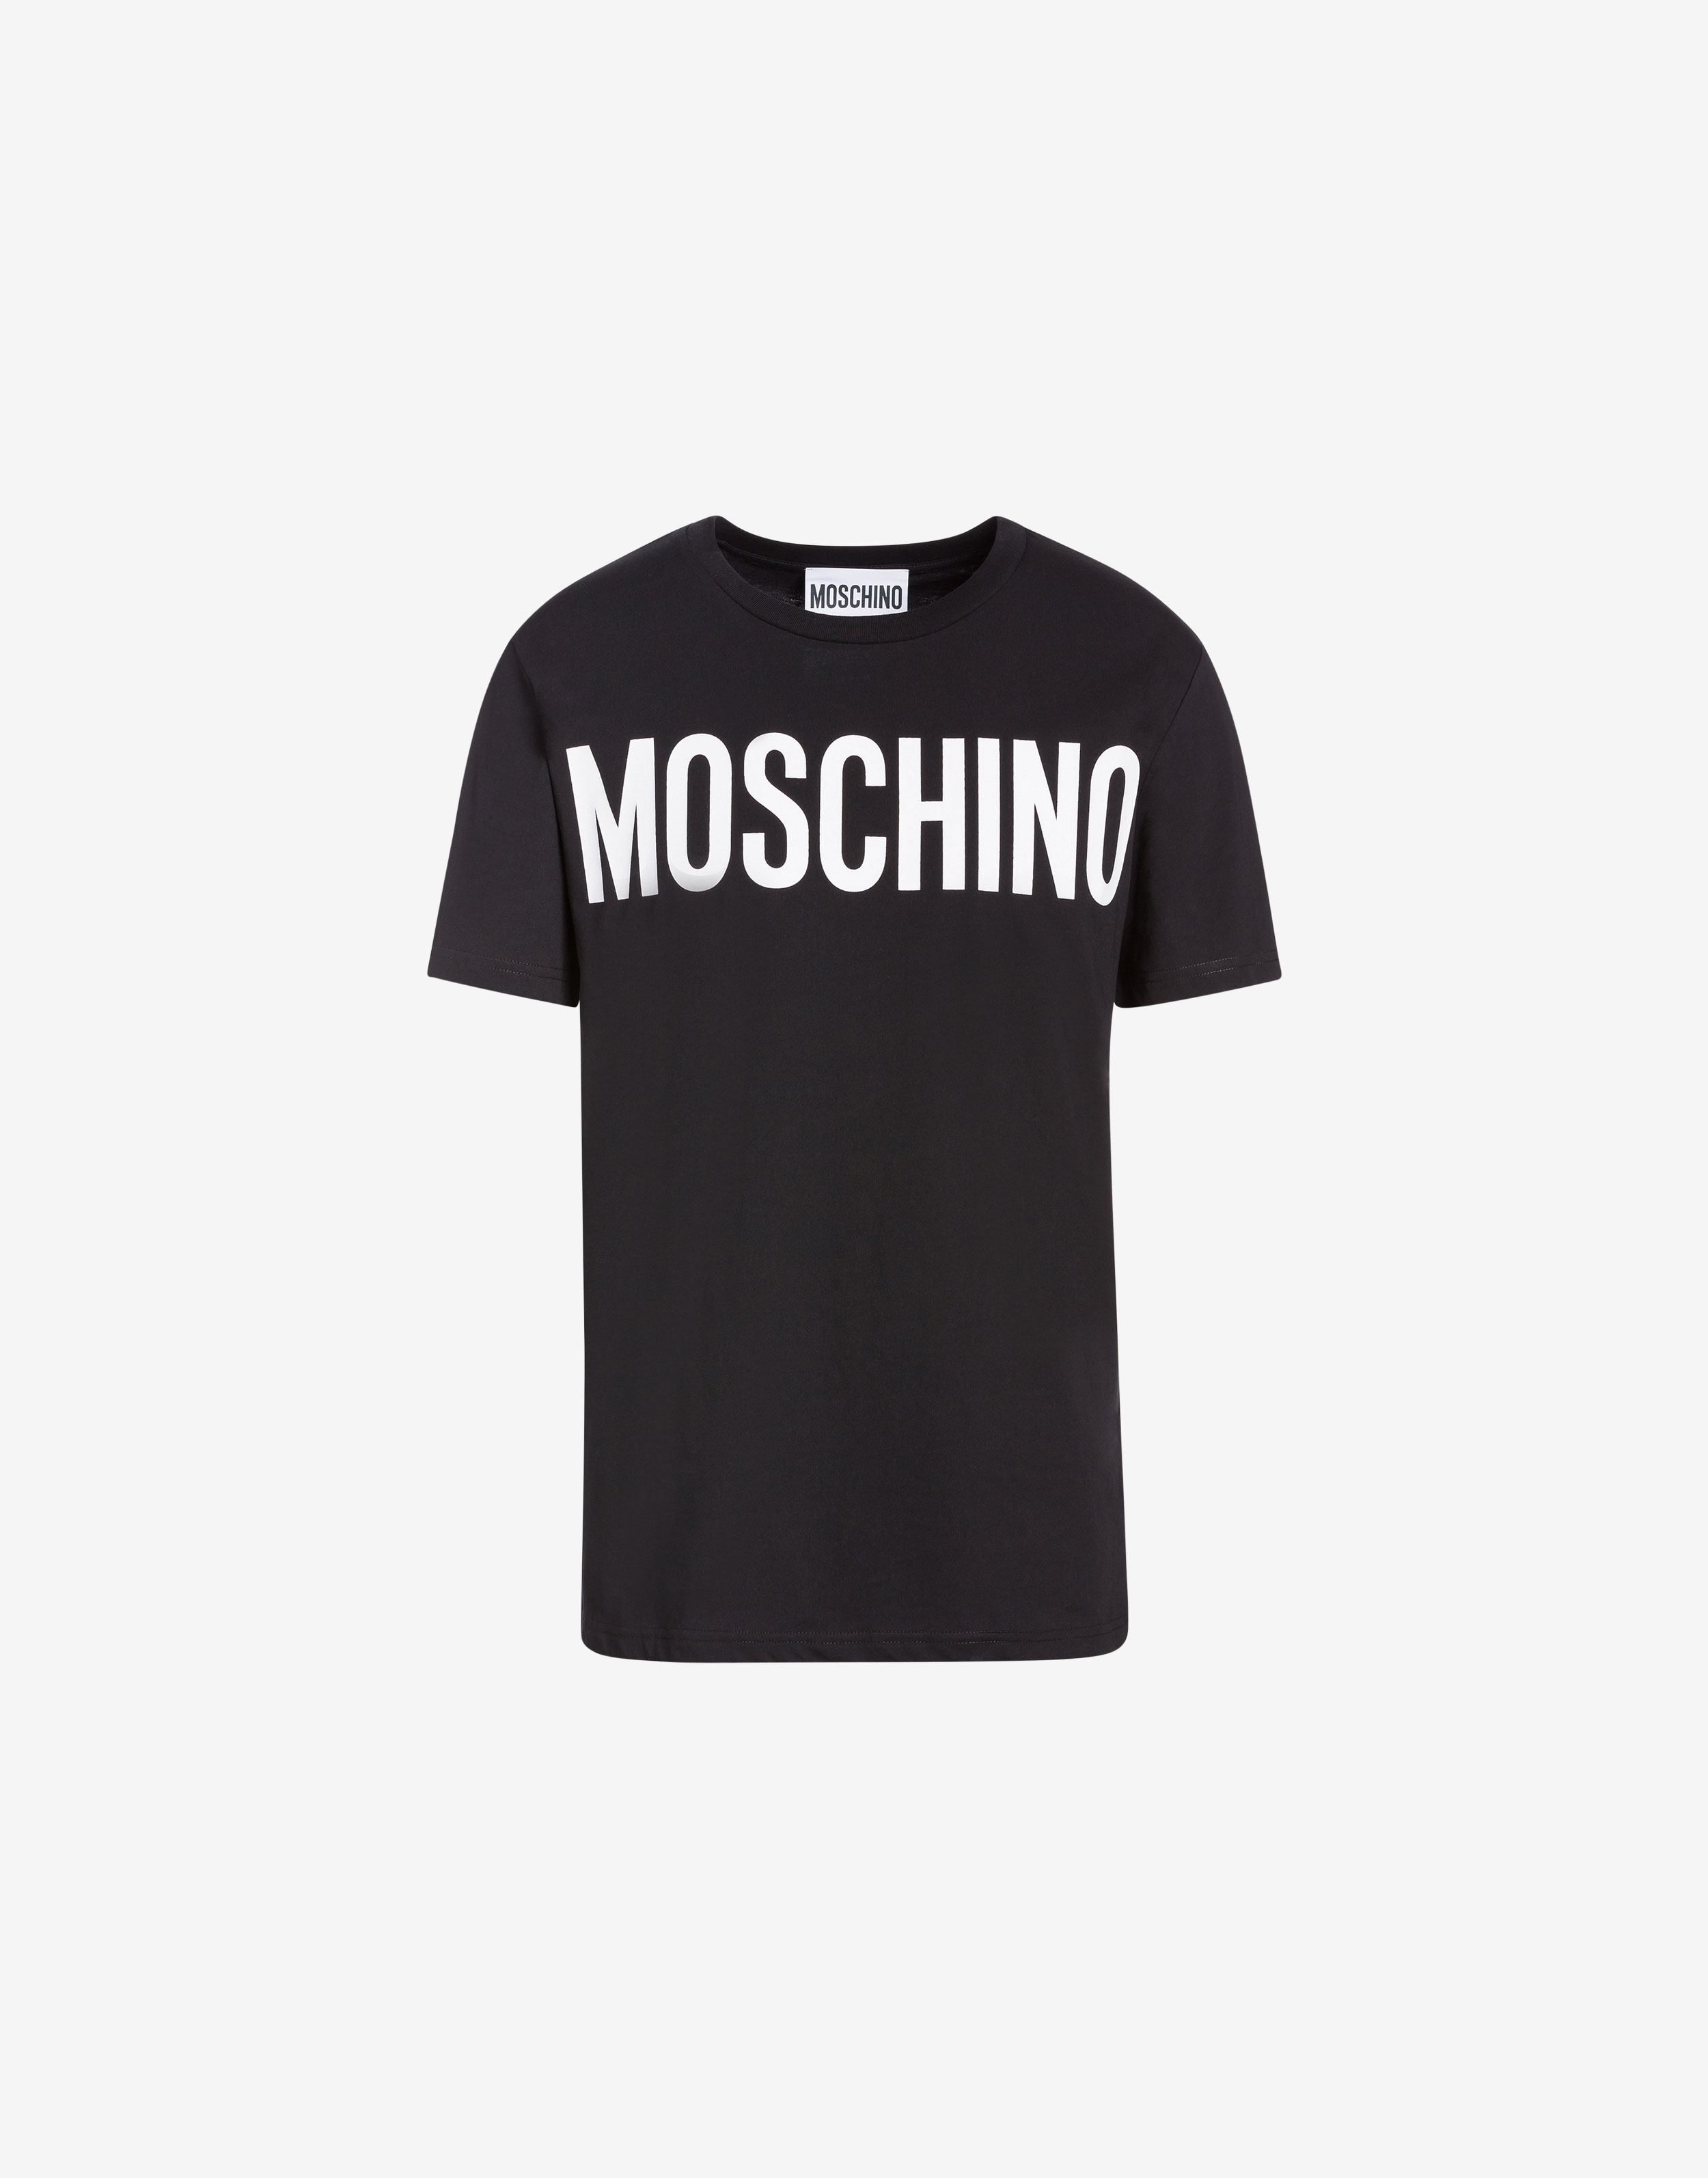 Moschino Men  Official Moschino® Store